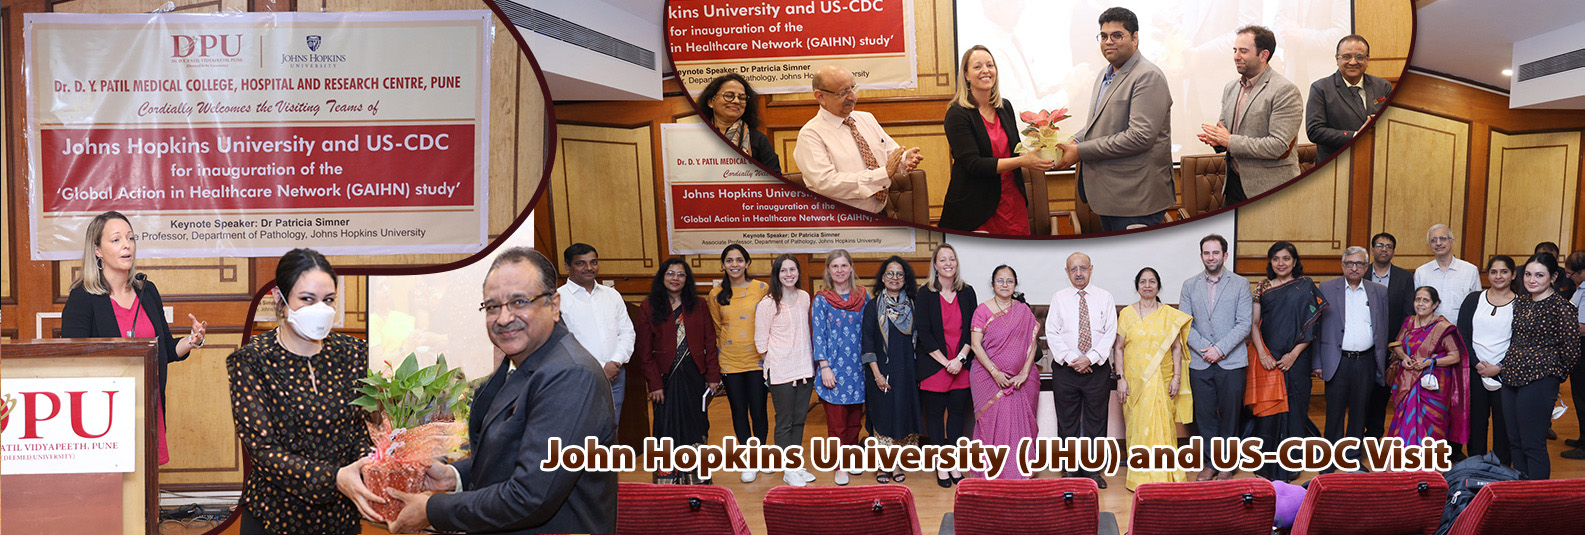 Johns Hopkins University (JHU) and US-CDC Visit